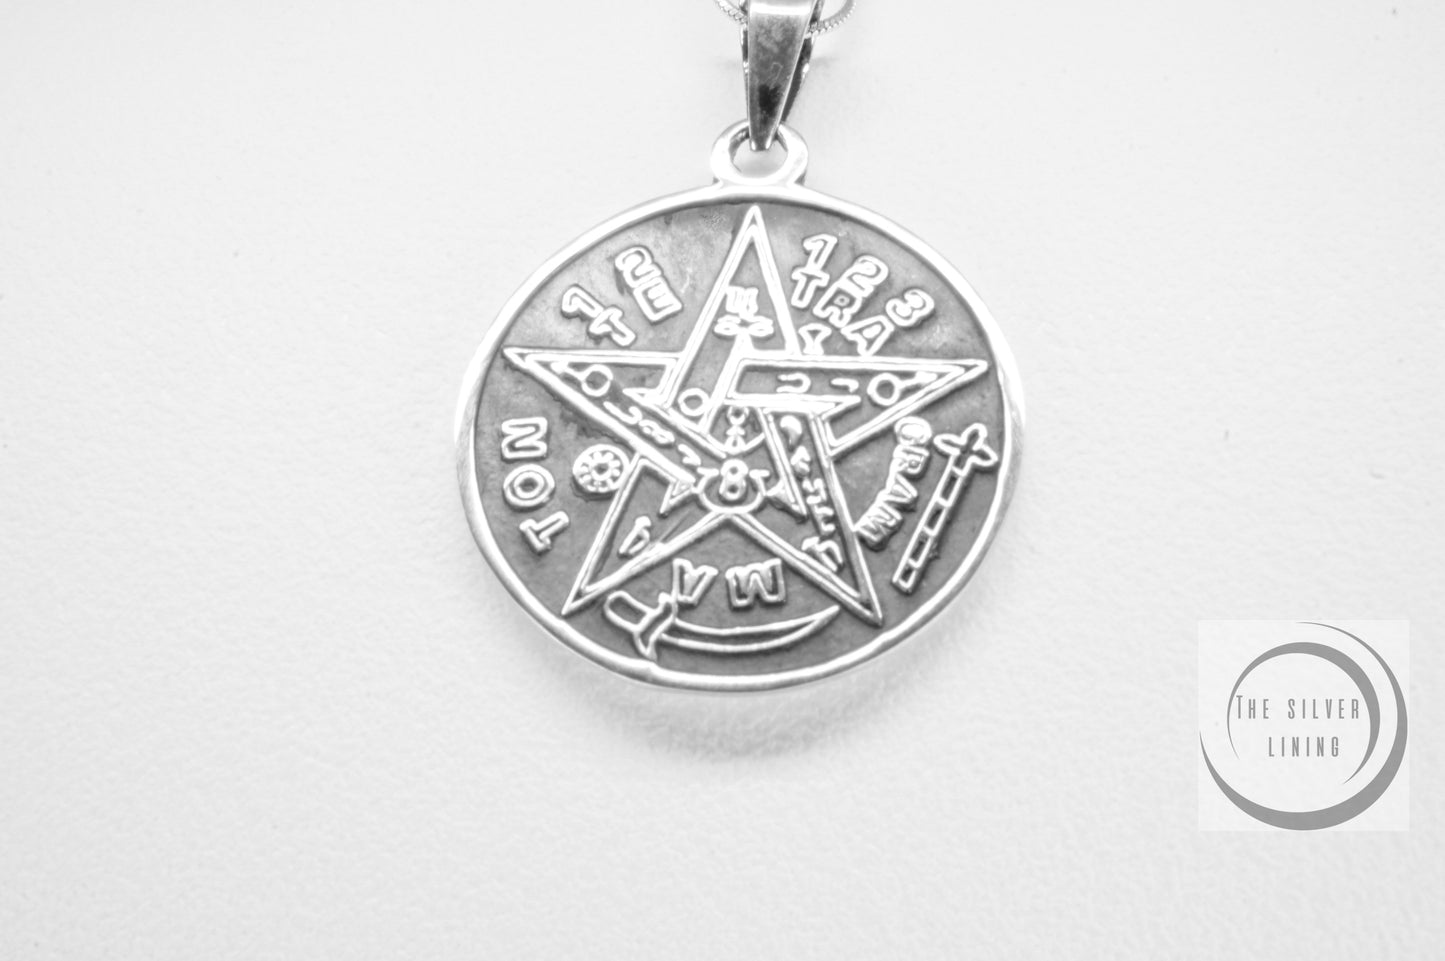 Dije de plata 925, Amuleto Tetragramatron con cadena incluída